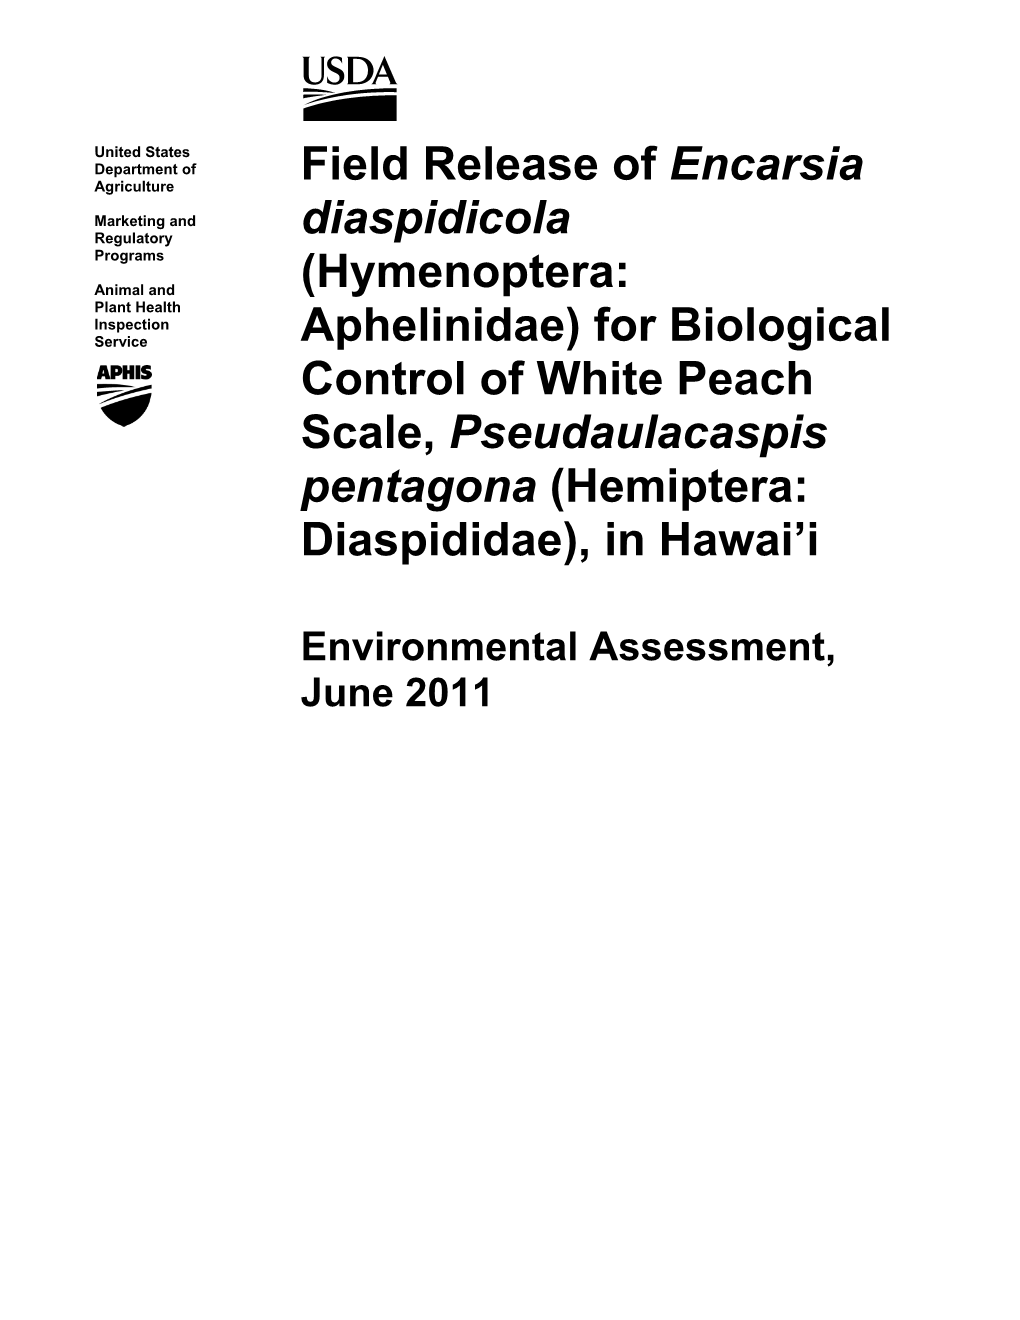 For Biological Control of White Peach Scale, Pseudaulacaspis Pentagona (Hemiptera: Diaspididae), in Hawai’I